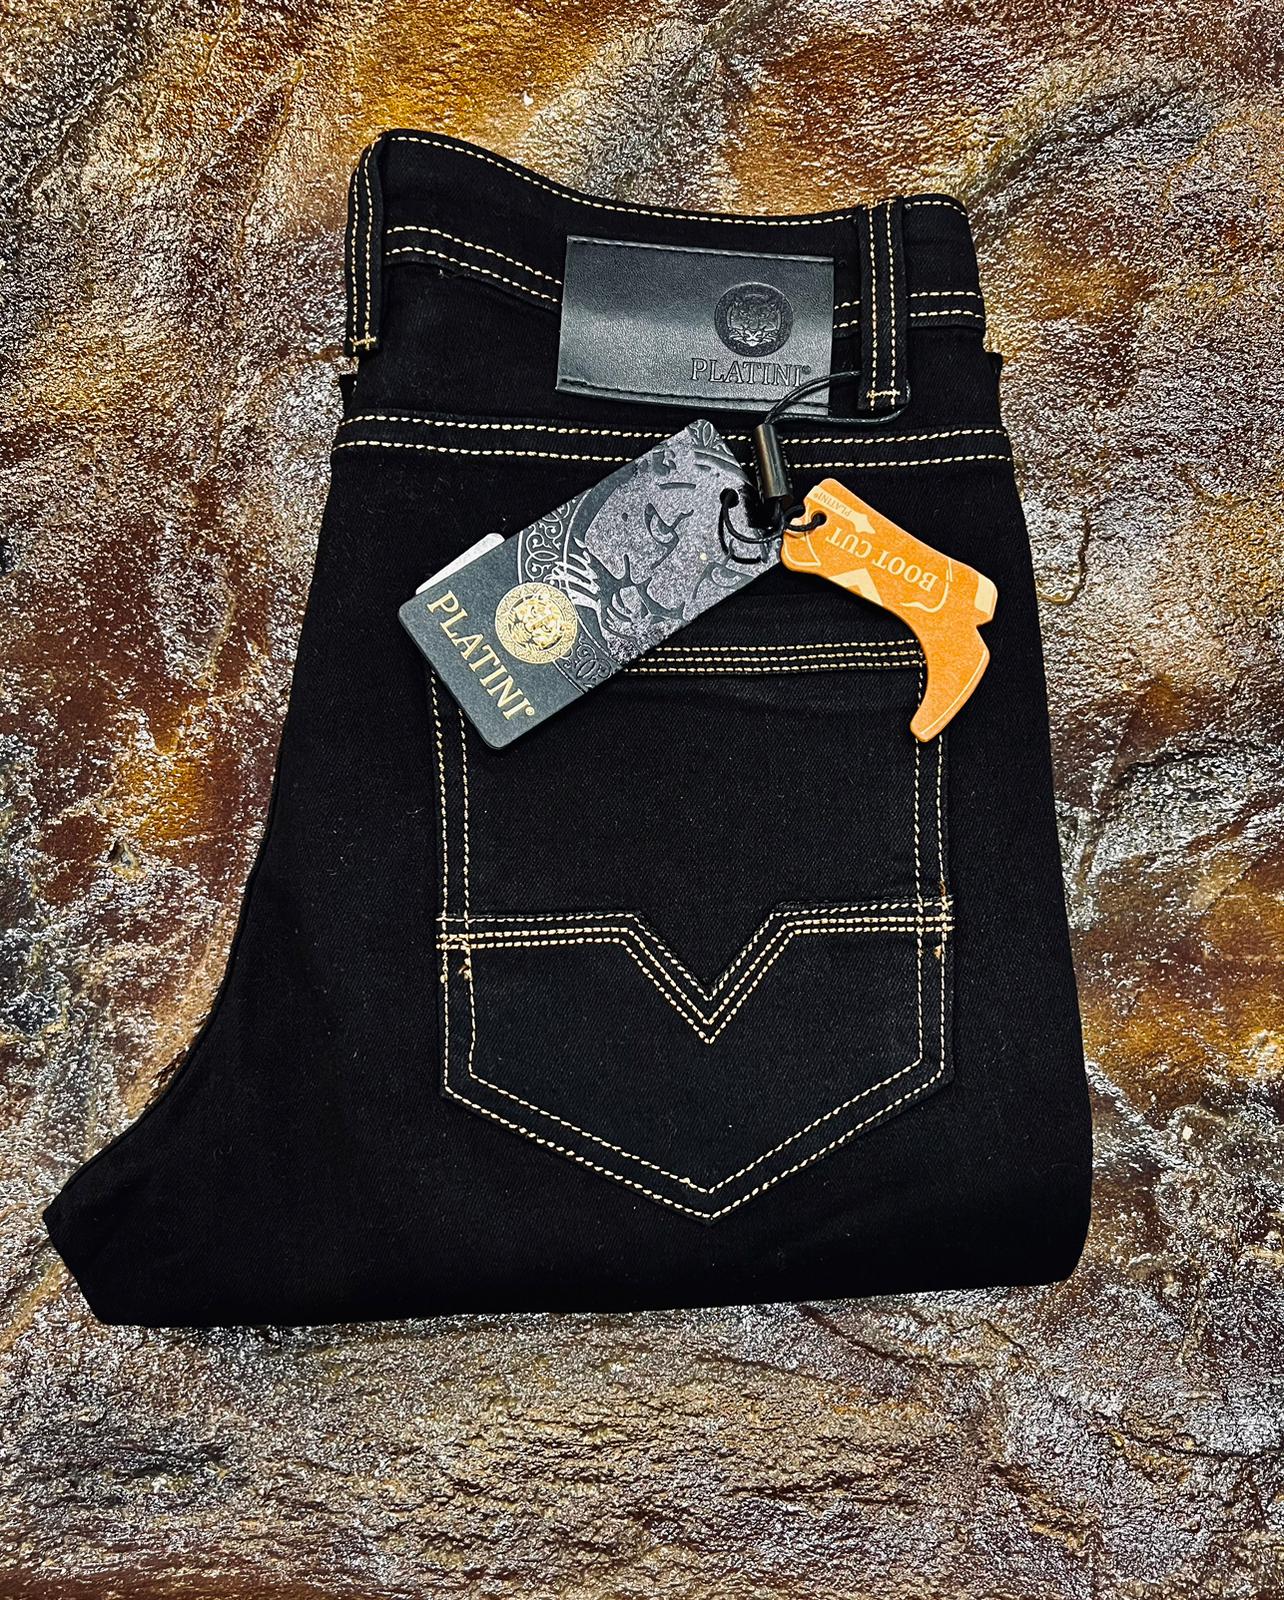 Boot Cut Black Jean With Cowboy Color Design Back Pocket